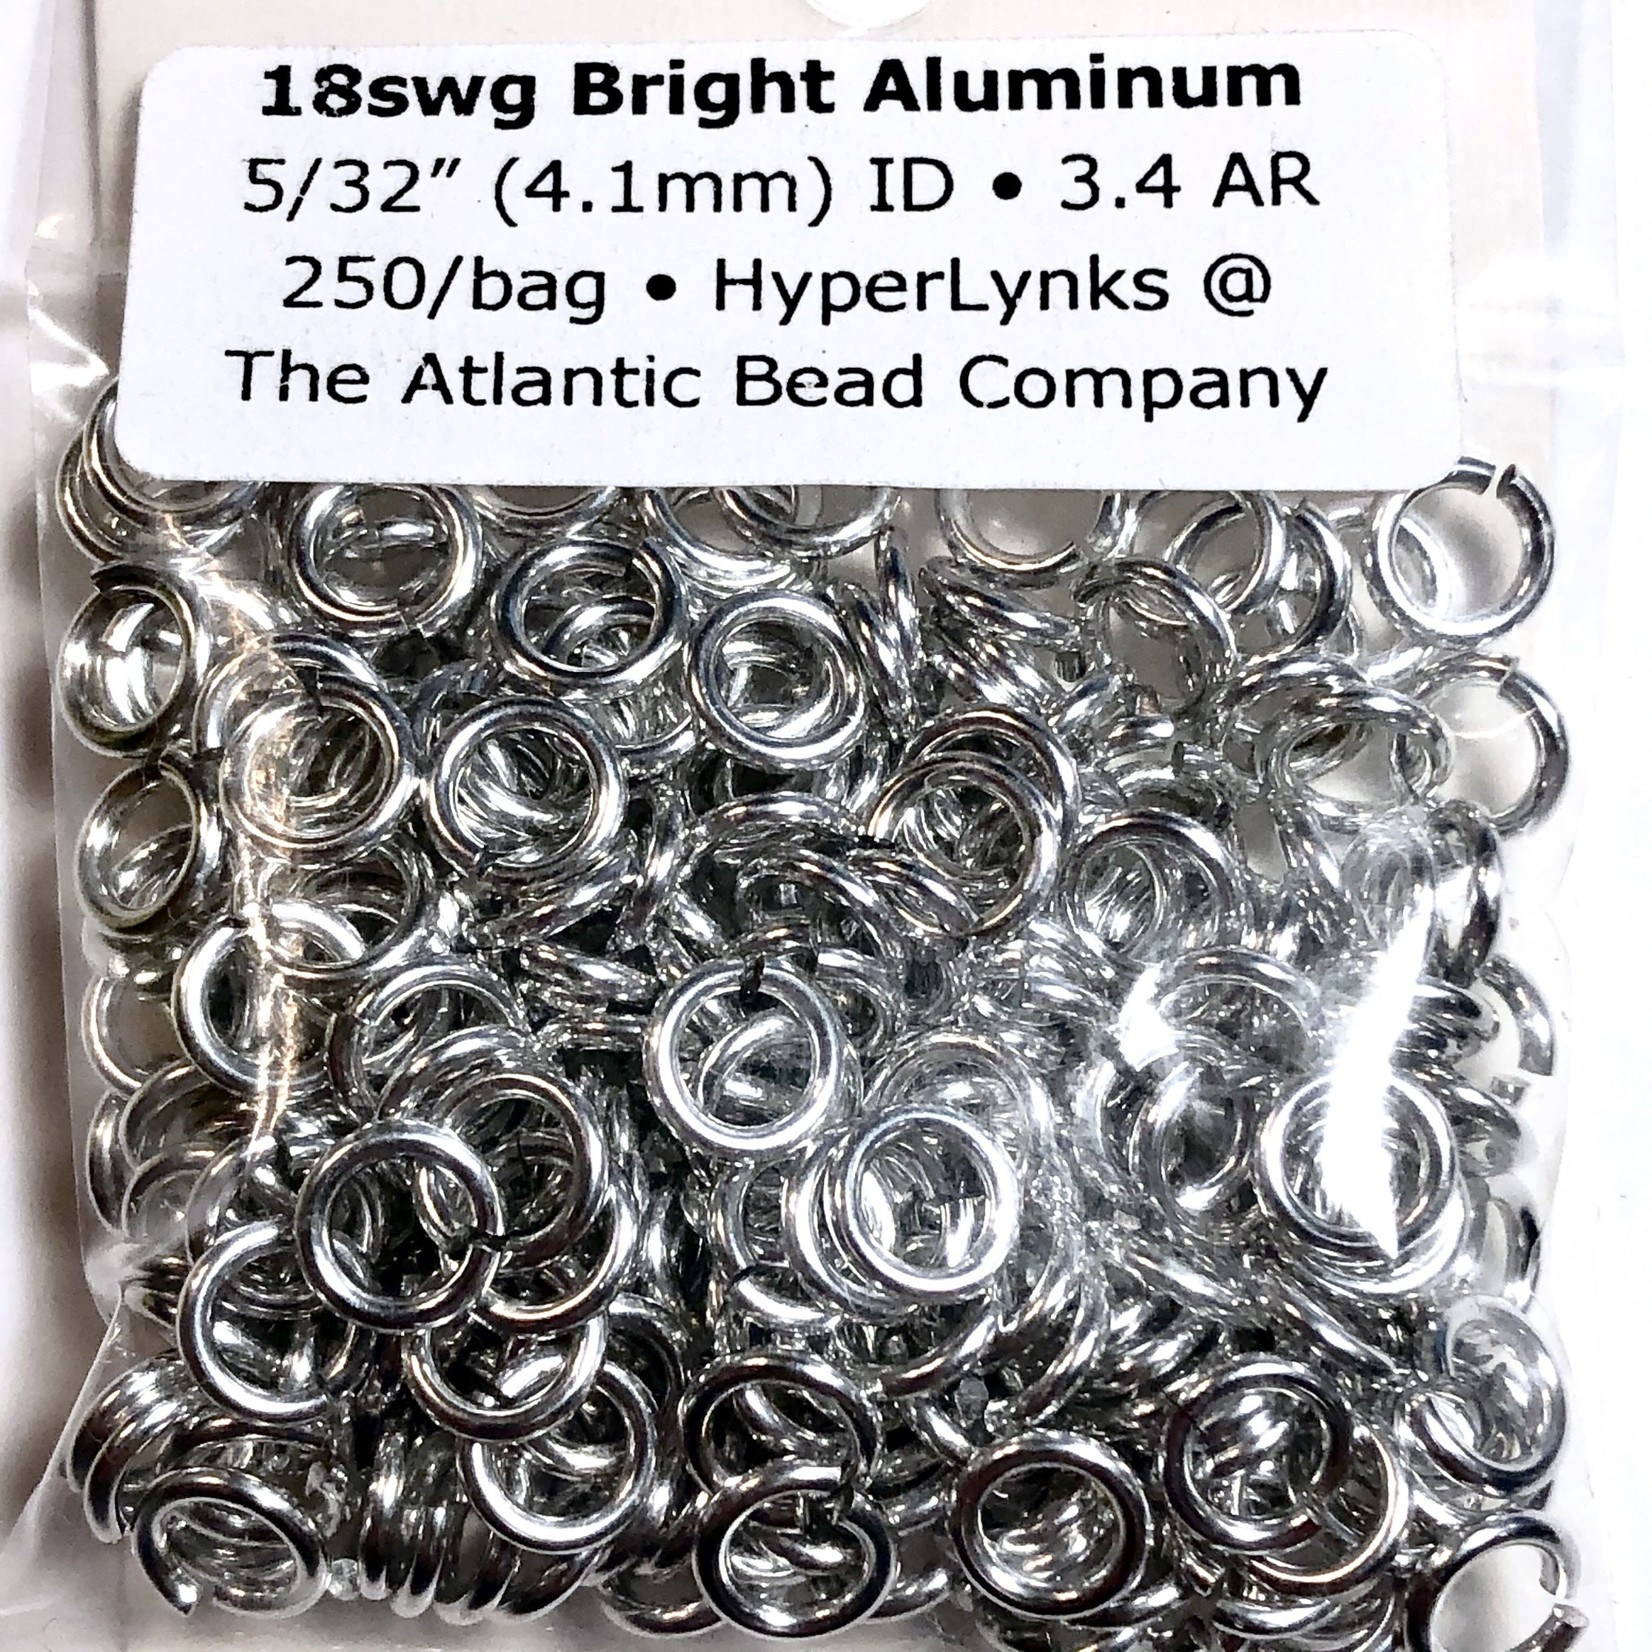 Hyperlinks Bright Aluminum Rings 18ga 5/32" 250pcs